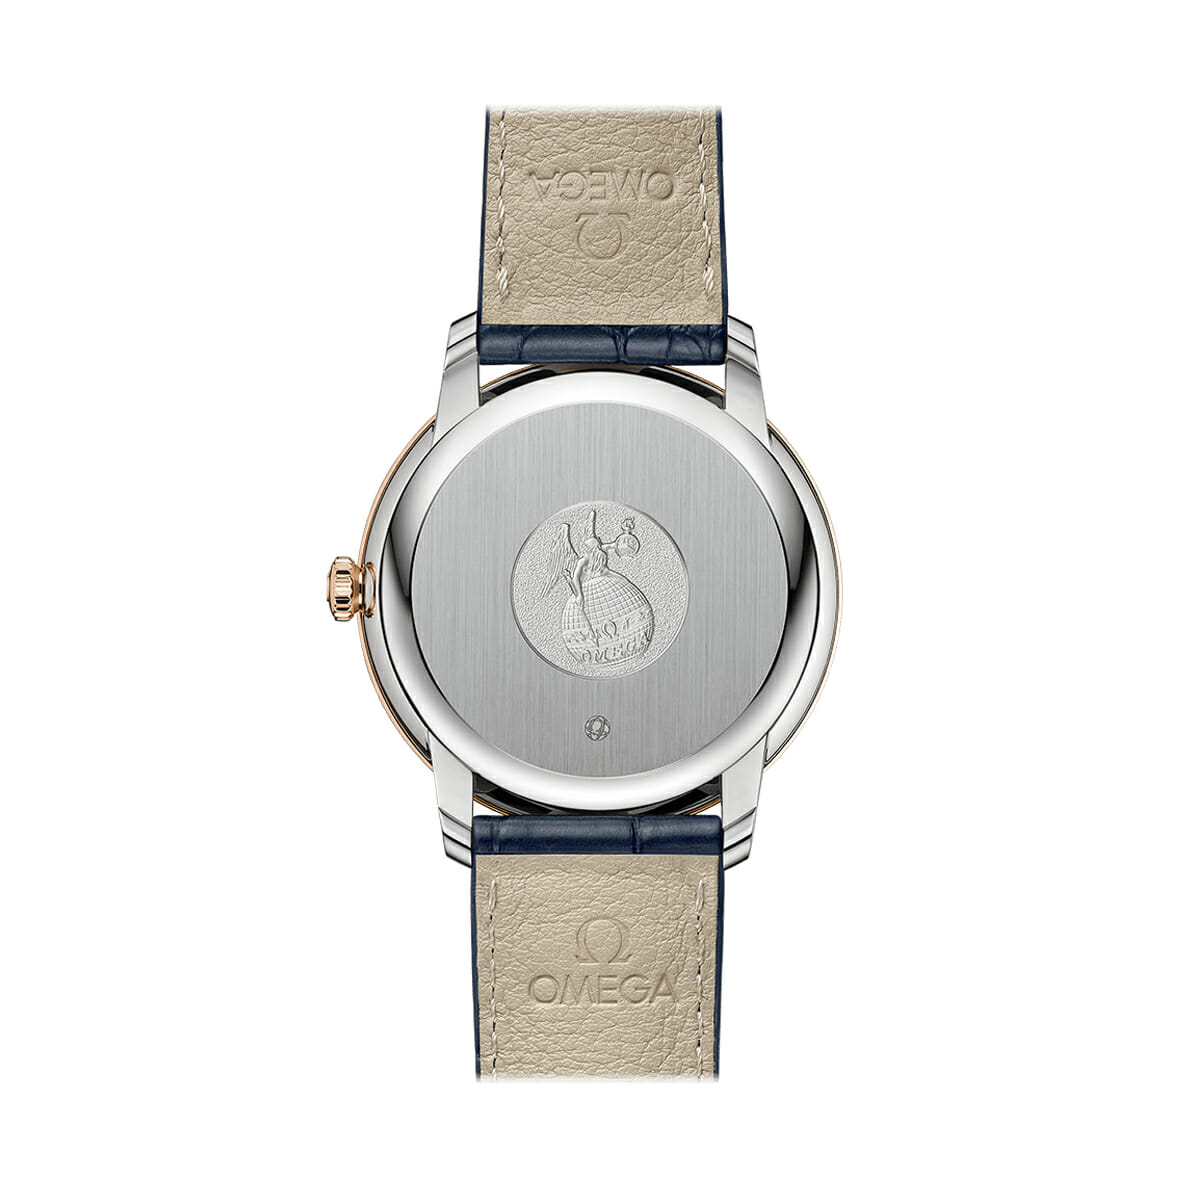 De Ville Prestige Co-Axial Chronometer 39.5mm Watch